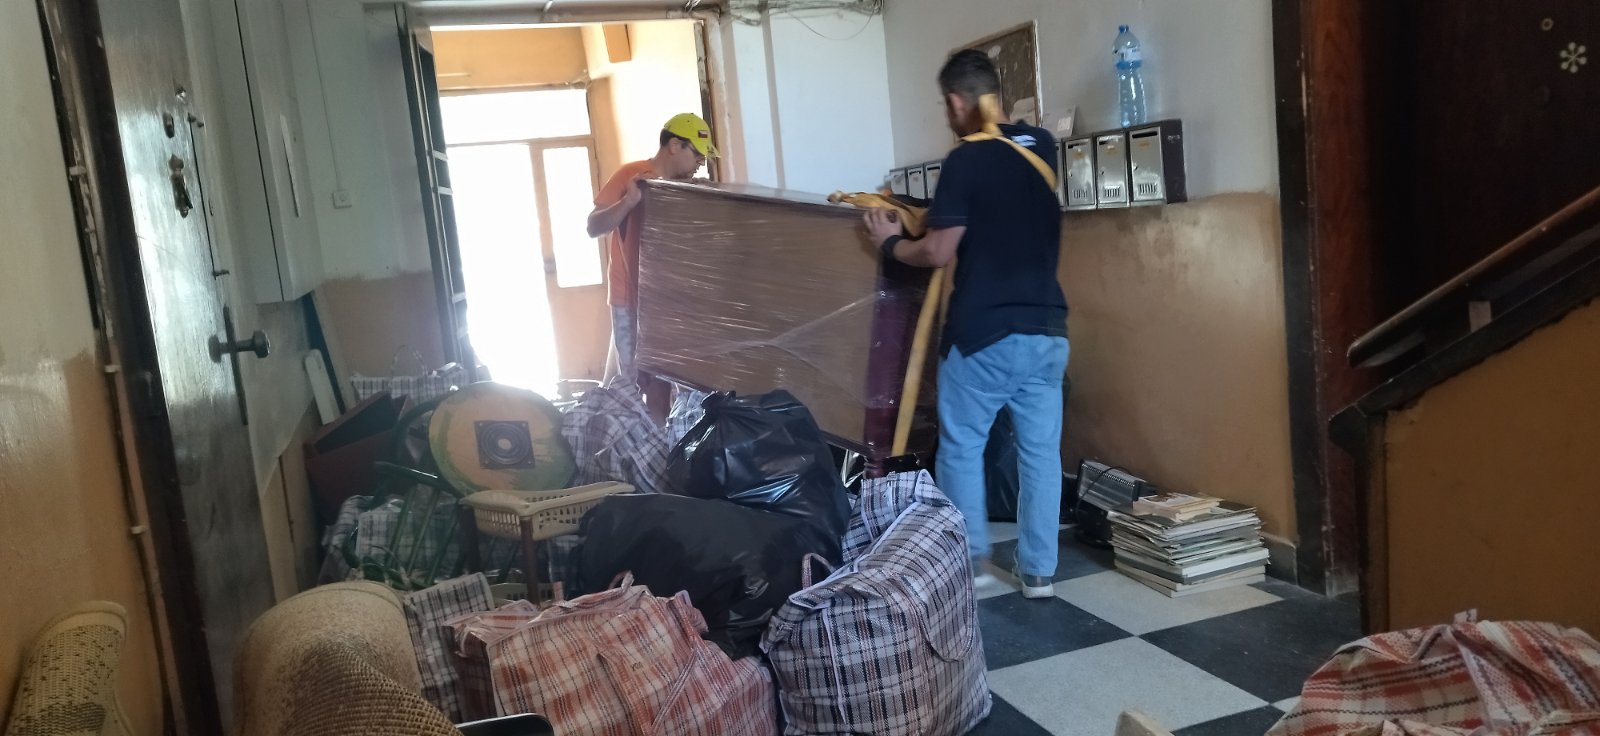 Пренасяне на дом ( багаж, покъщнина ) поради смяна на местоживеене от Хамали Совия Мувхом